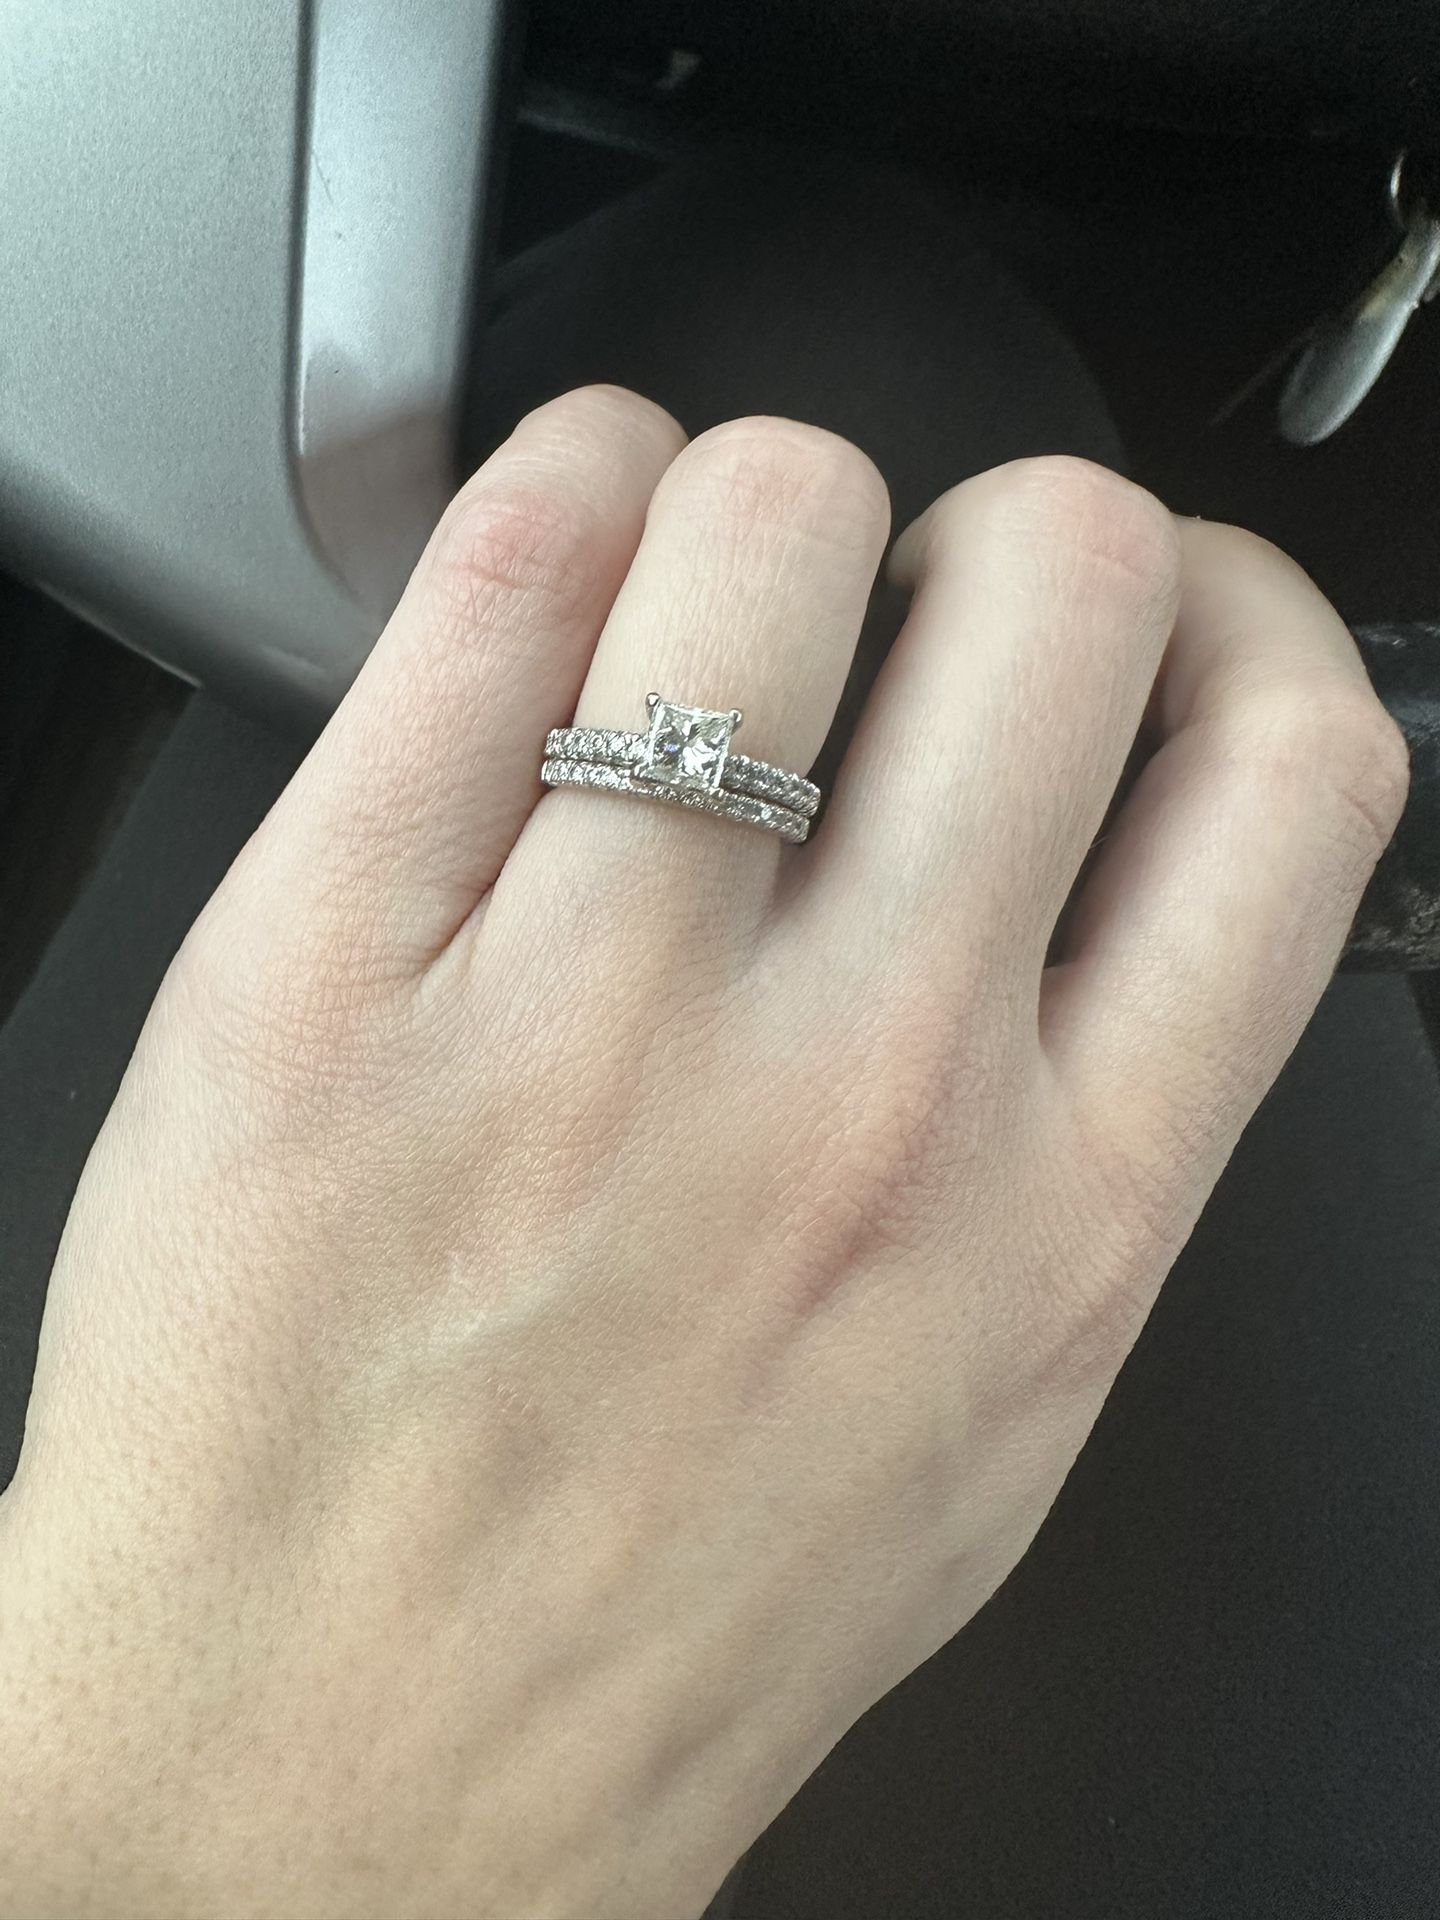 .89 K Princess Cut Diamond Ring And Wedding Band Size 5 